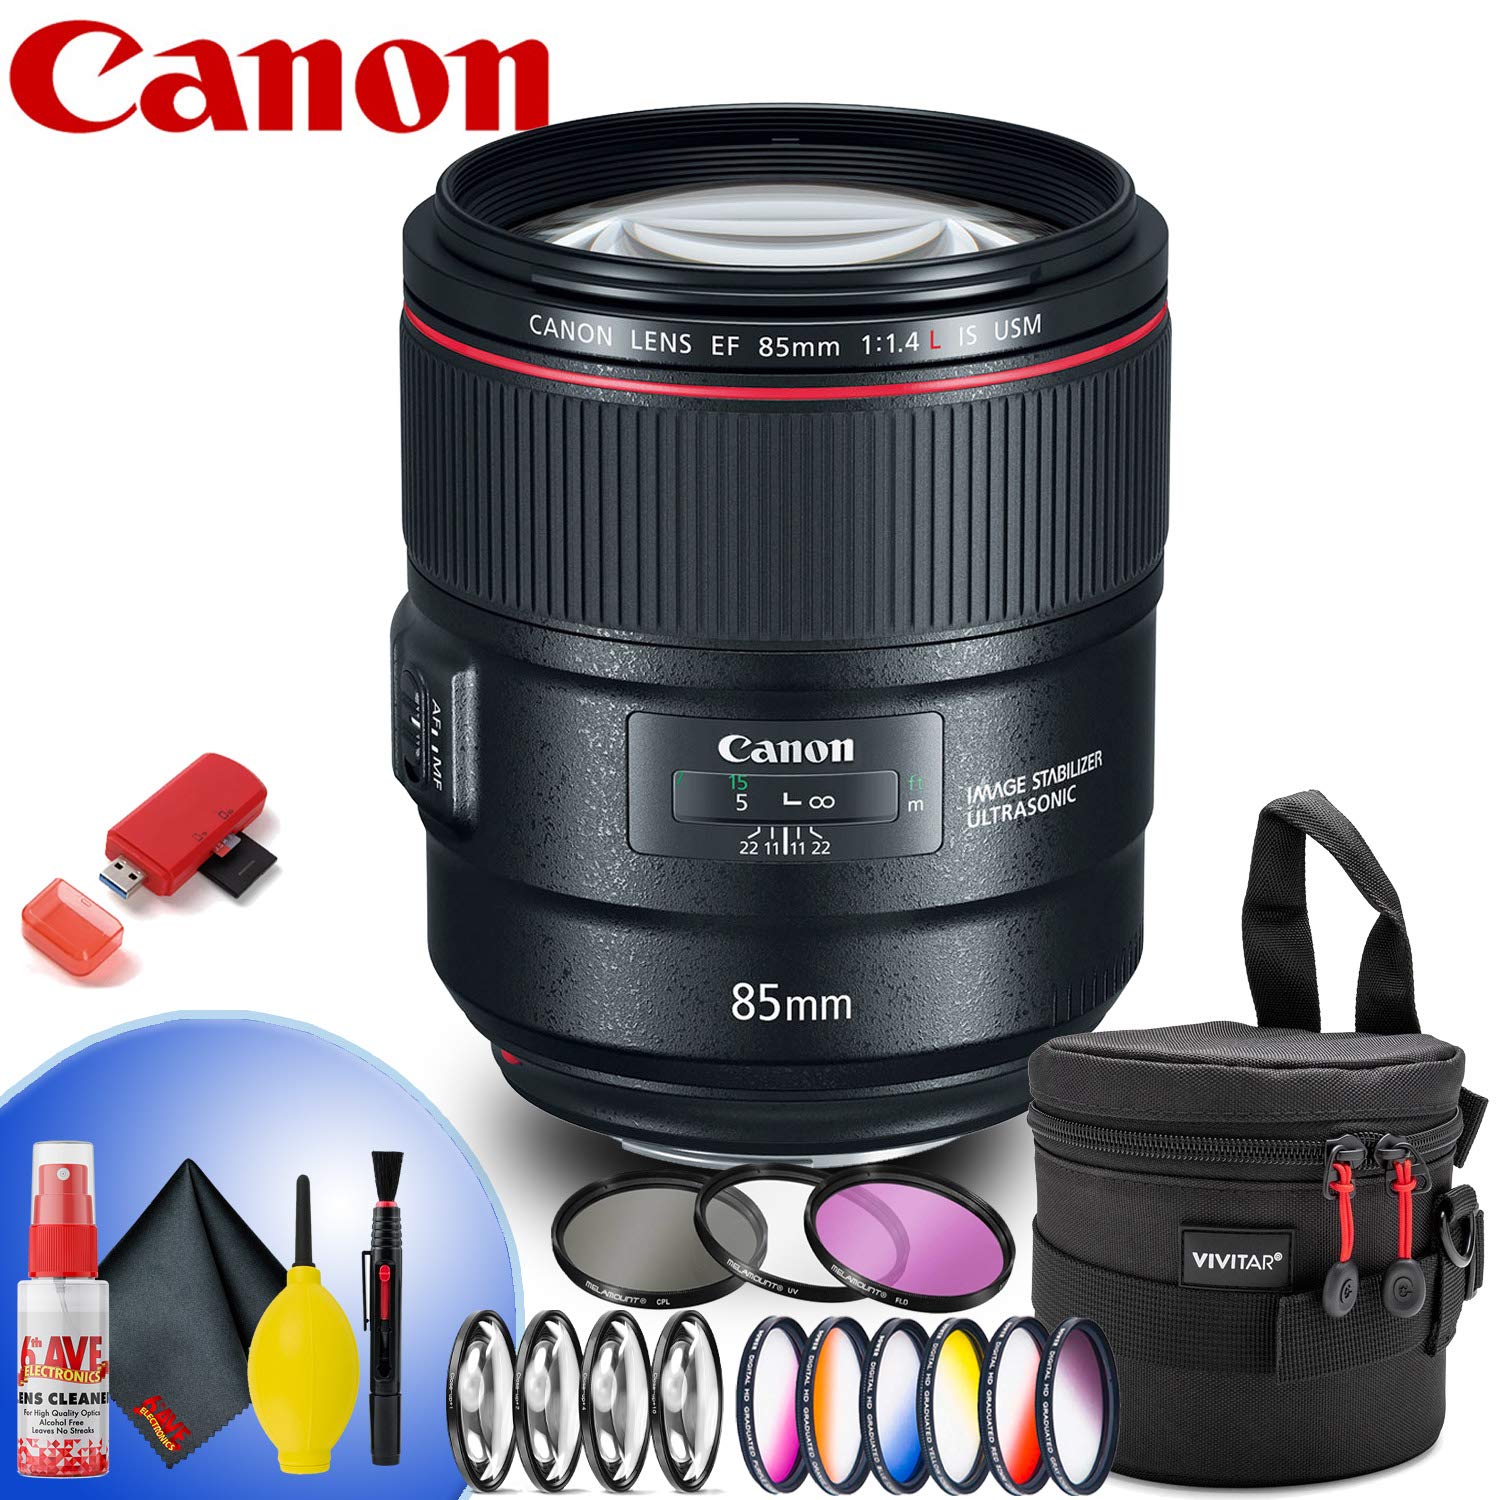 Canon EF 85mm f/1.4L IS USM Lens (Intl Model) - Perfect Prime Portrait Lens